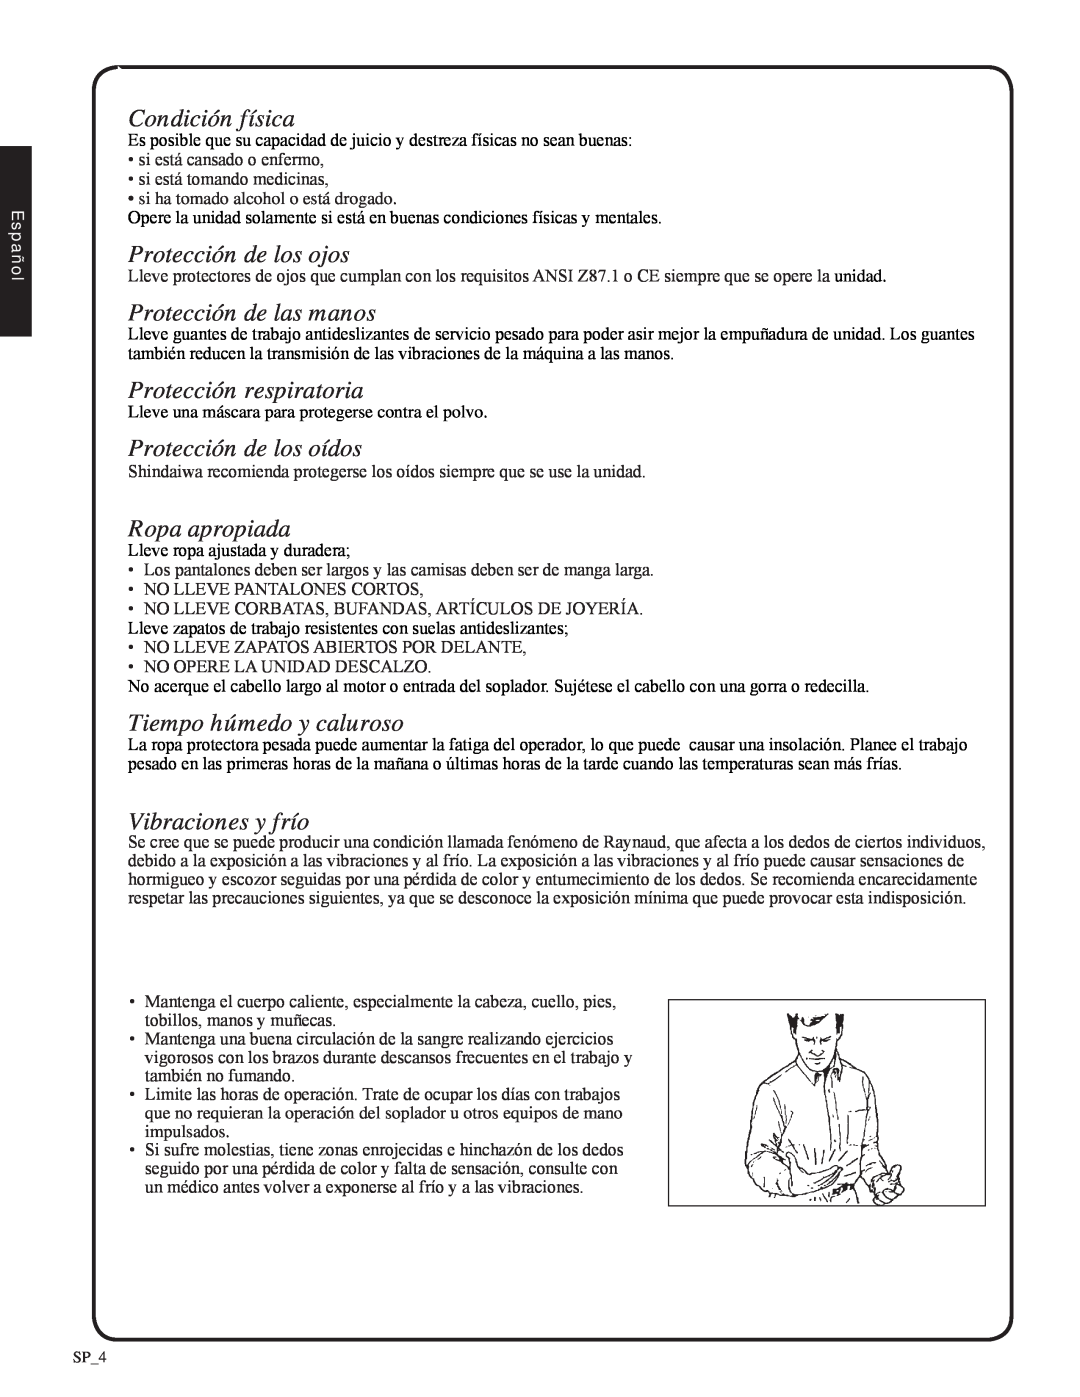 Shindaiwa EB212 Condición física, Protección de los ojos, Protección de las manos, Protección respiratoria, Ropa apropiada 